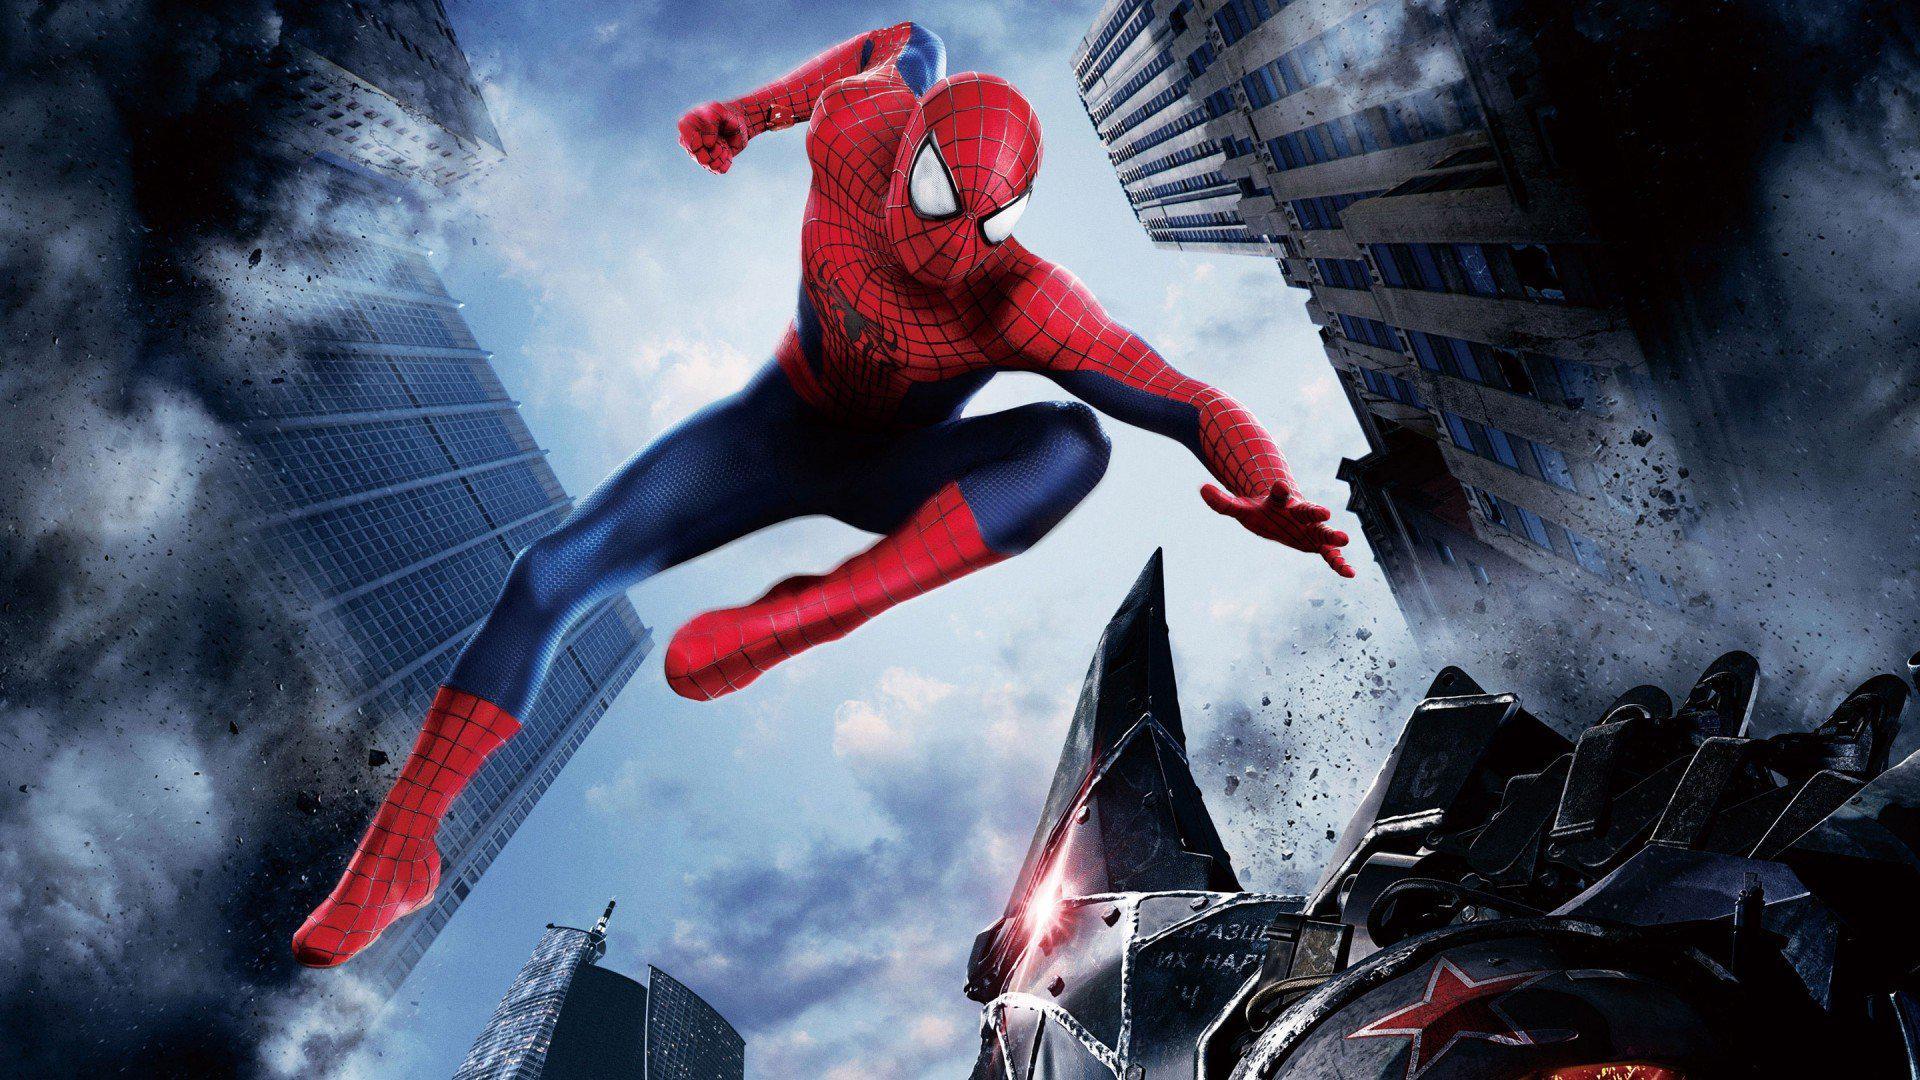 HD Amazing Spider Man Action Adventure Fantasy Comics Movie